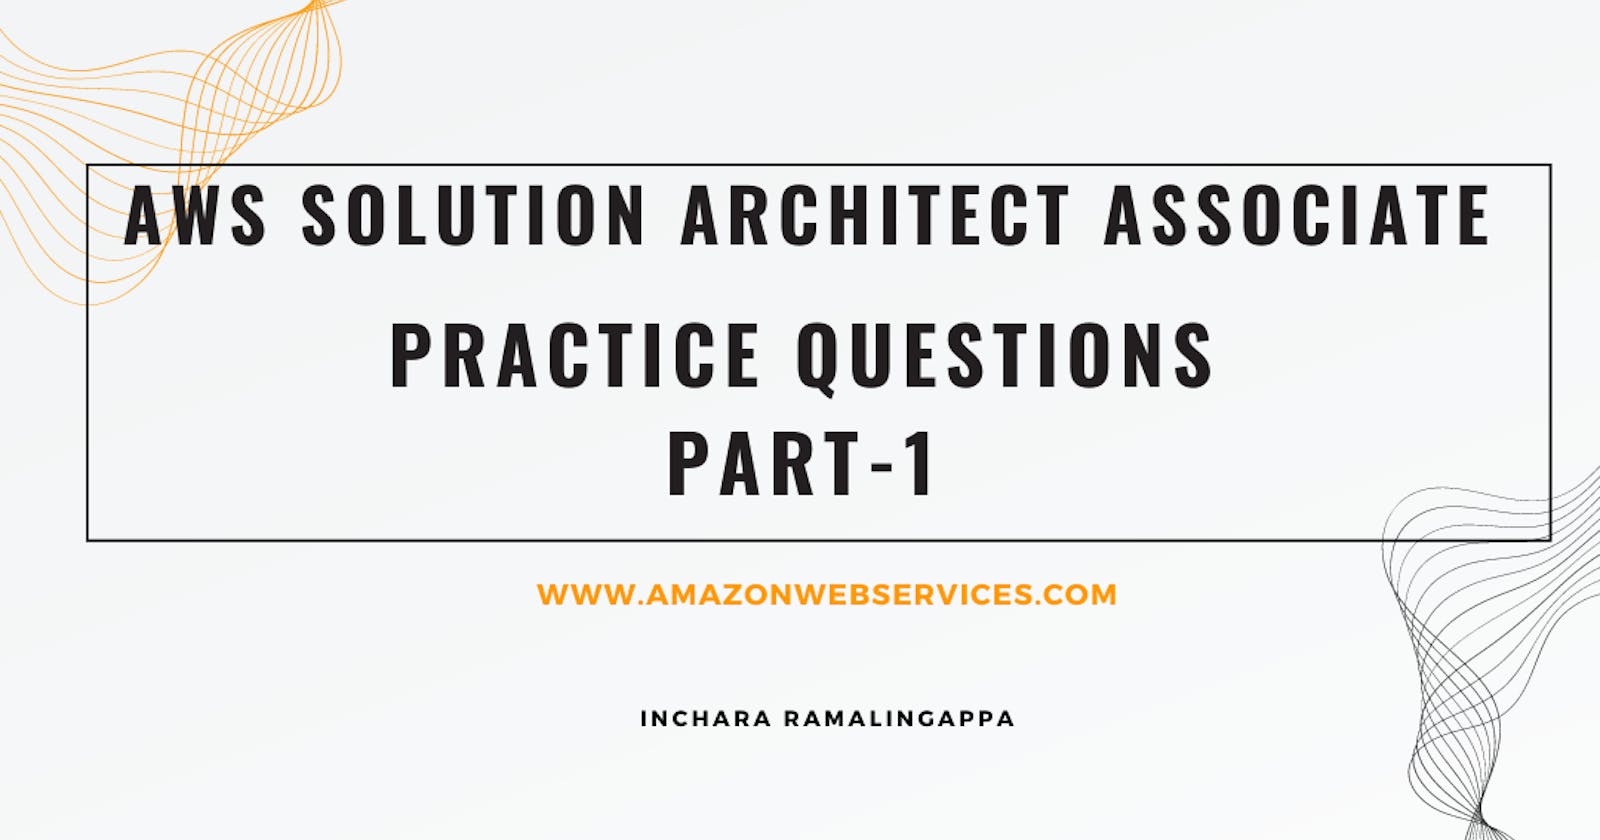 AWS Solution Architect Associate Practice Questions, Part-1